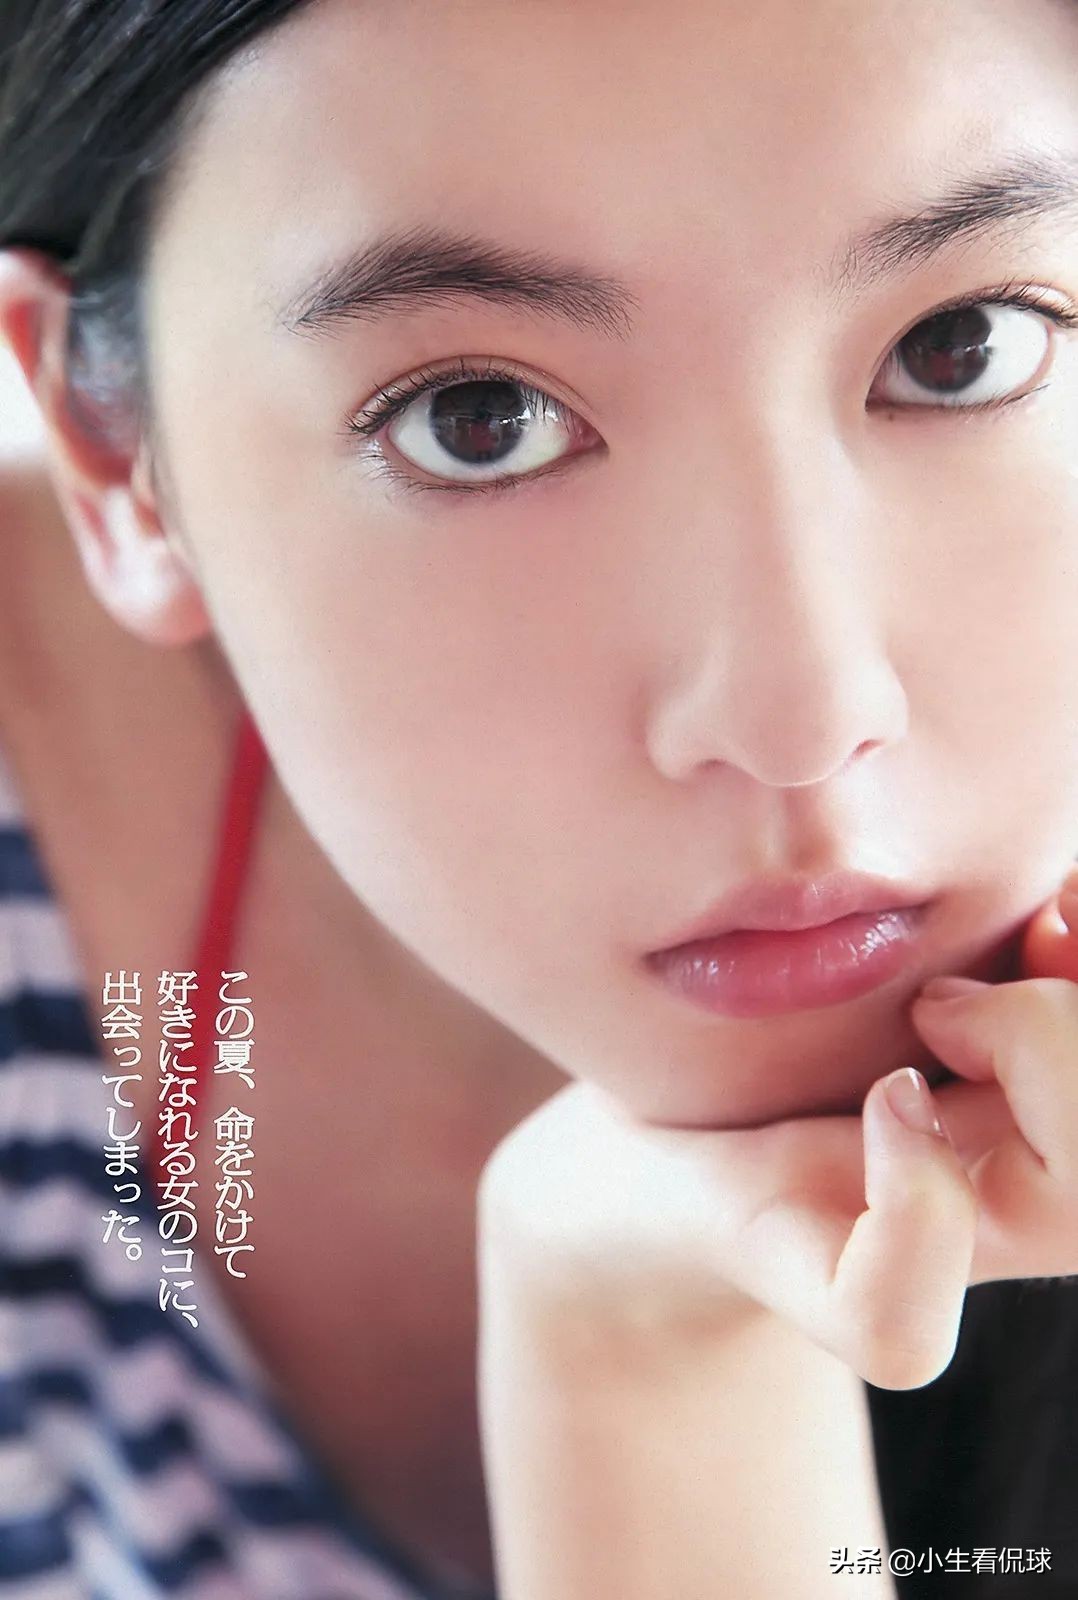 3 auspicious colour spends Zhou Jielun MV female advocate Japanese belle